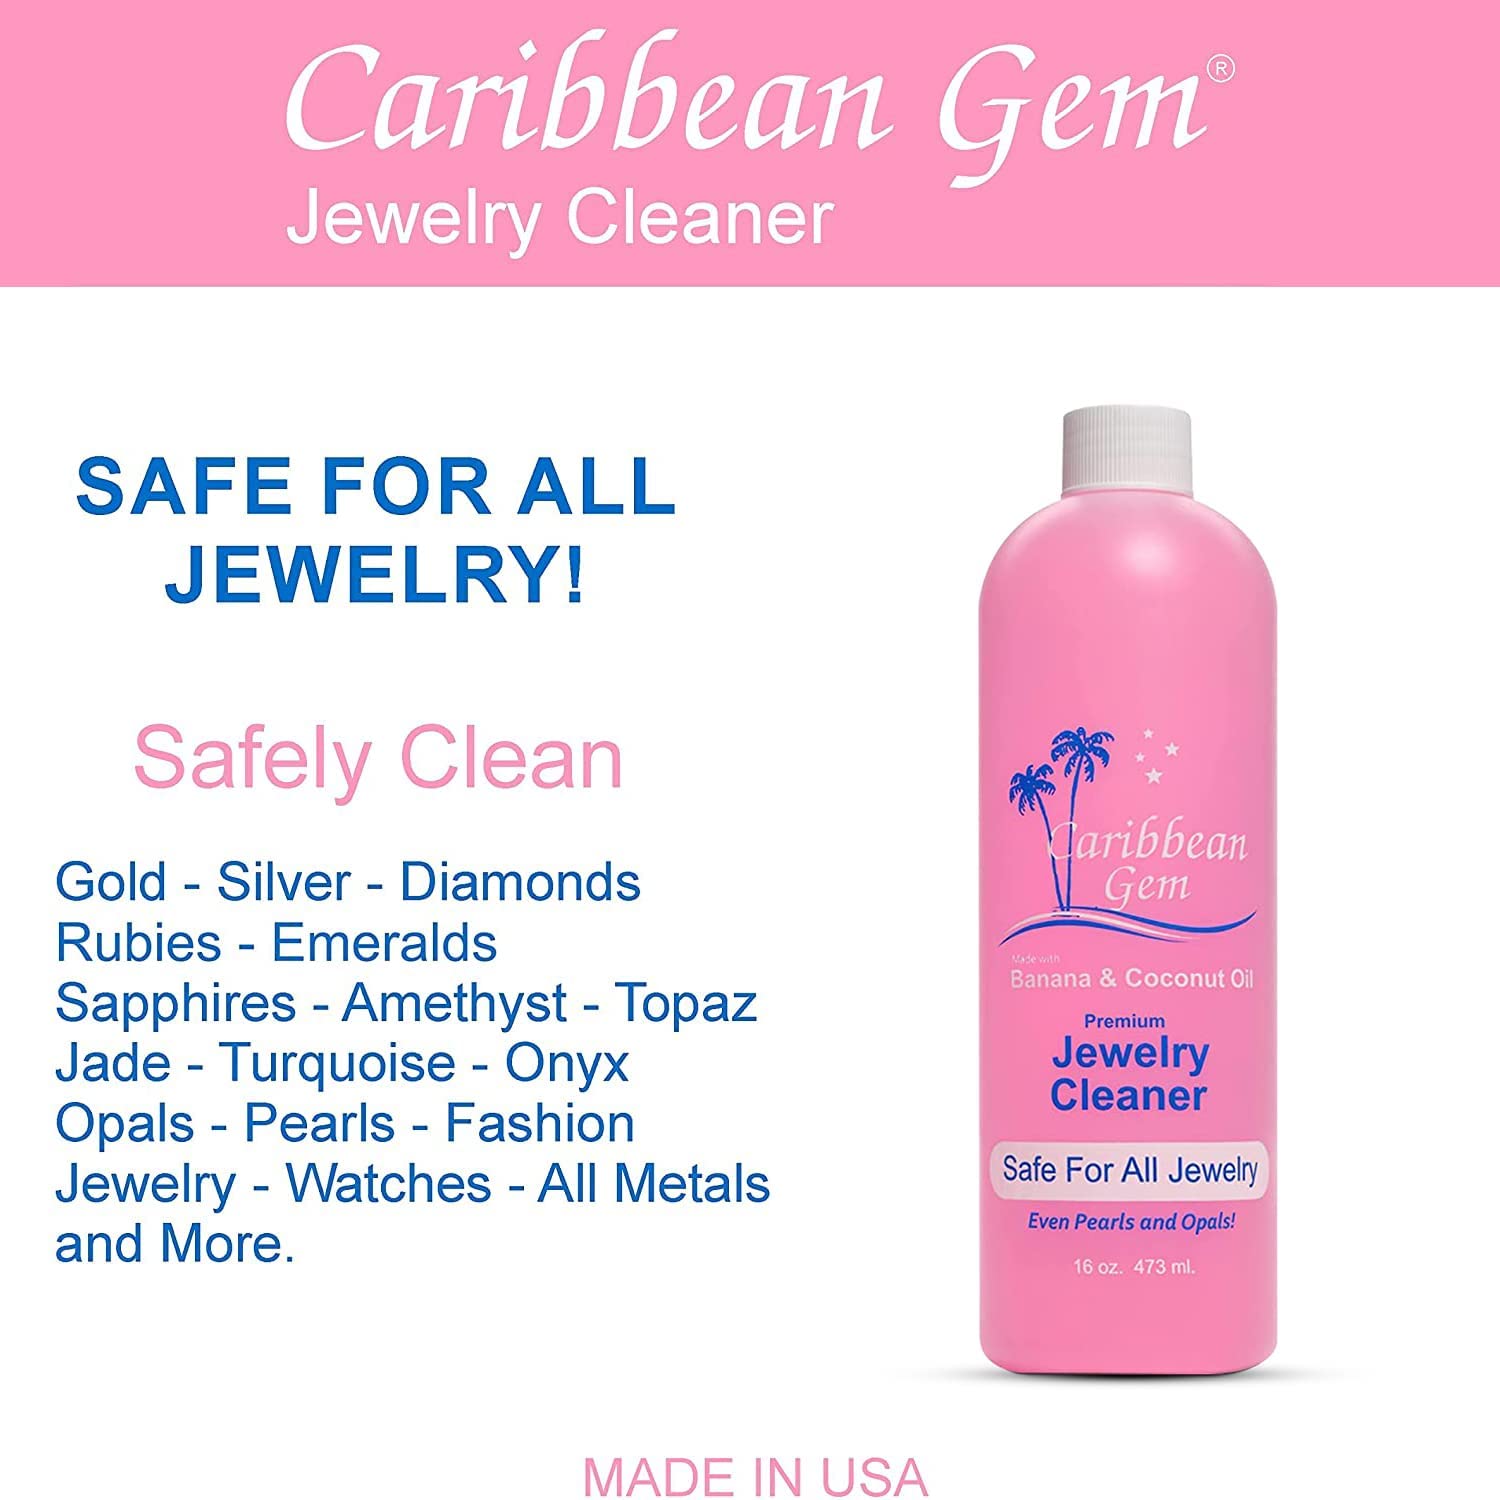 Caribbean Gem Jewelry Cleaner Solution, Polishing Cream, Basket